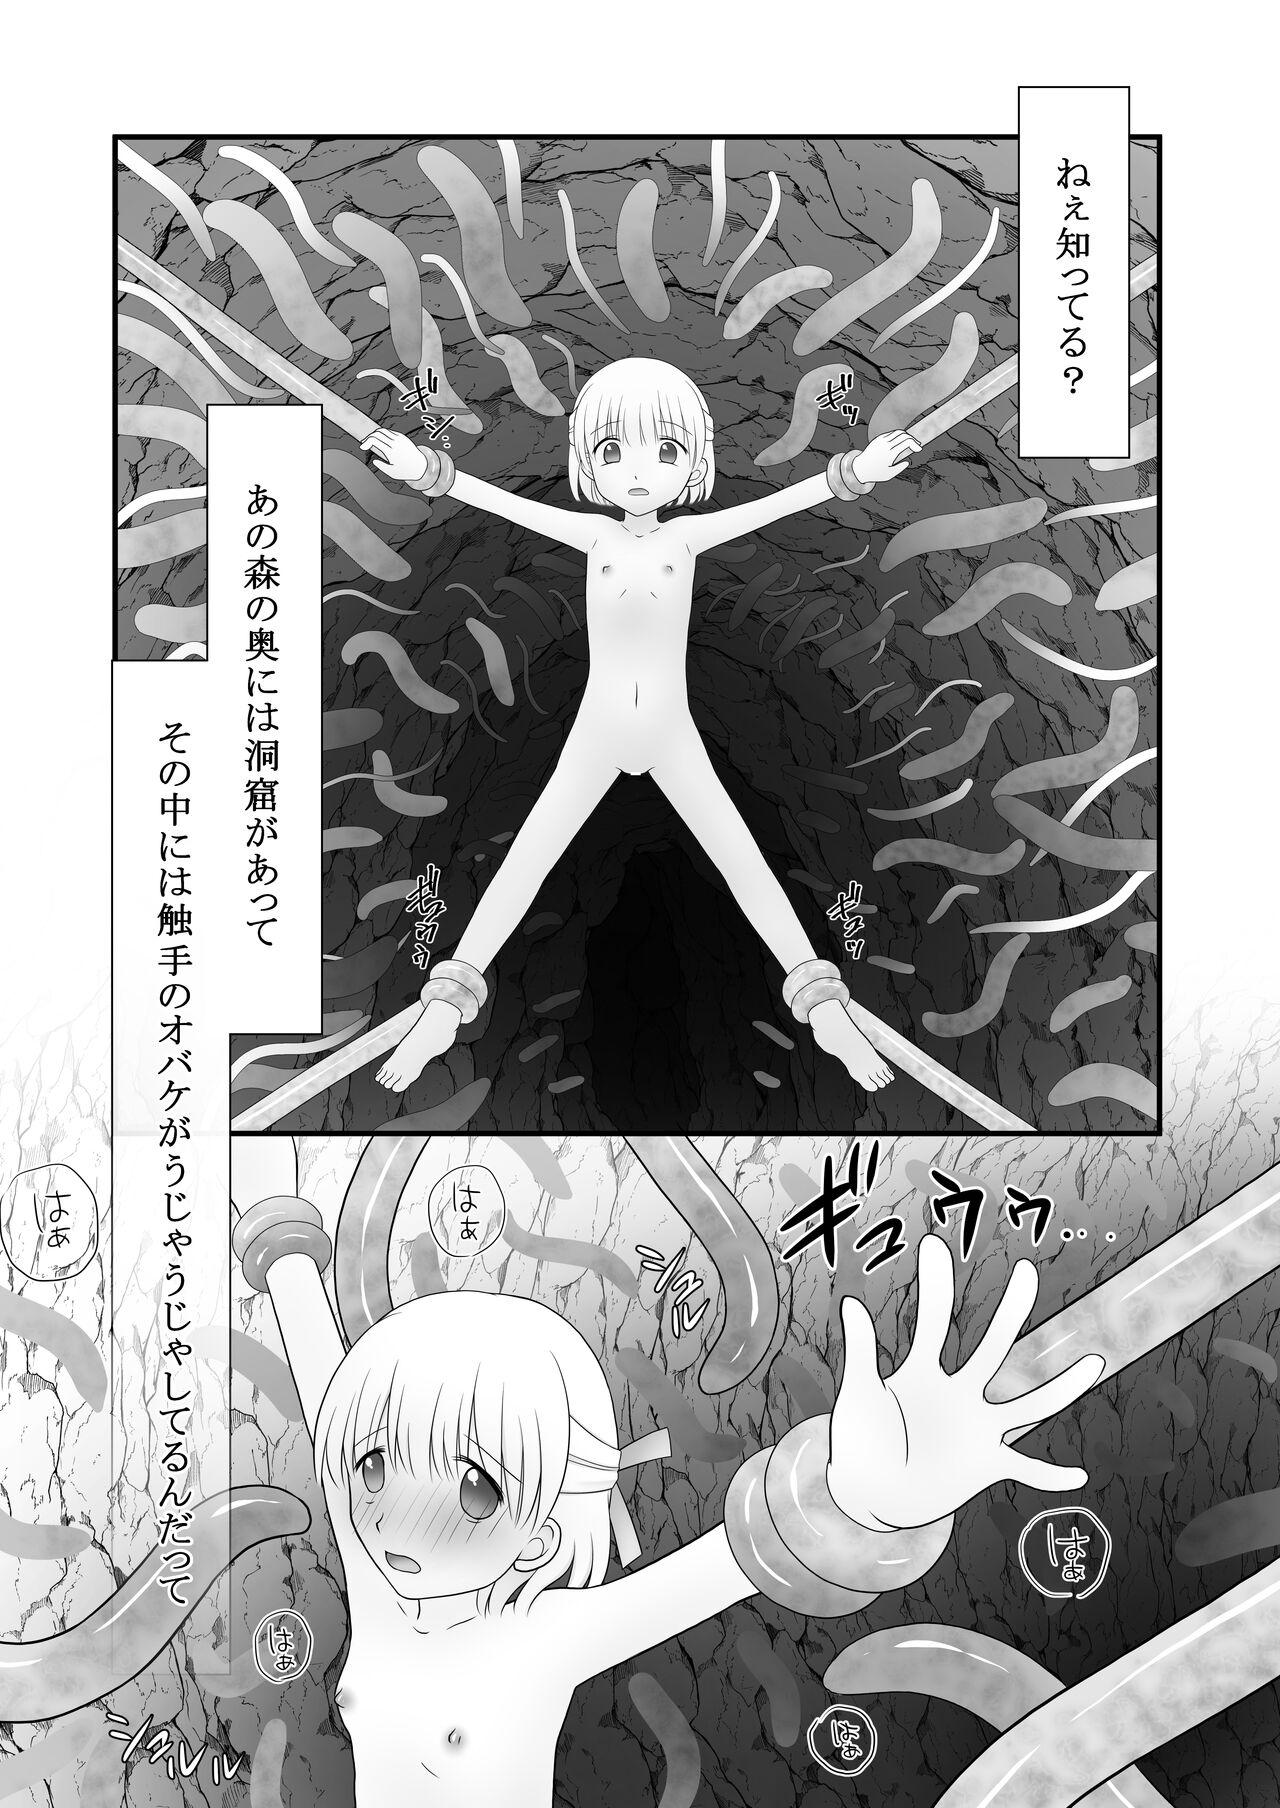 Red Head Maigo no Mori no Kusuguribana 4 - Original Camporn - Page 6